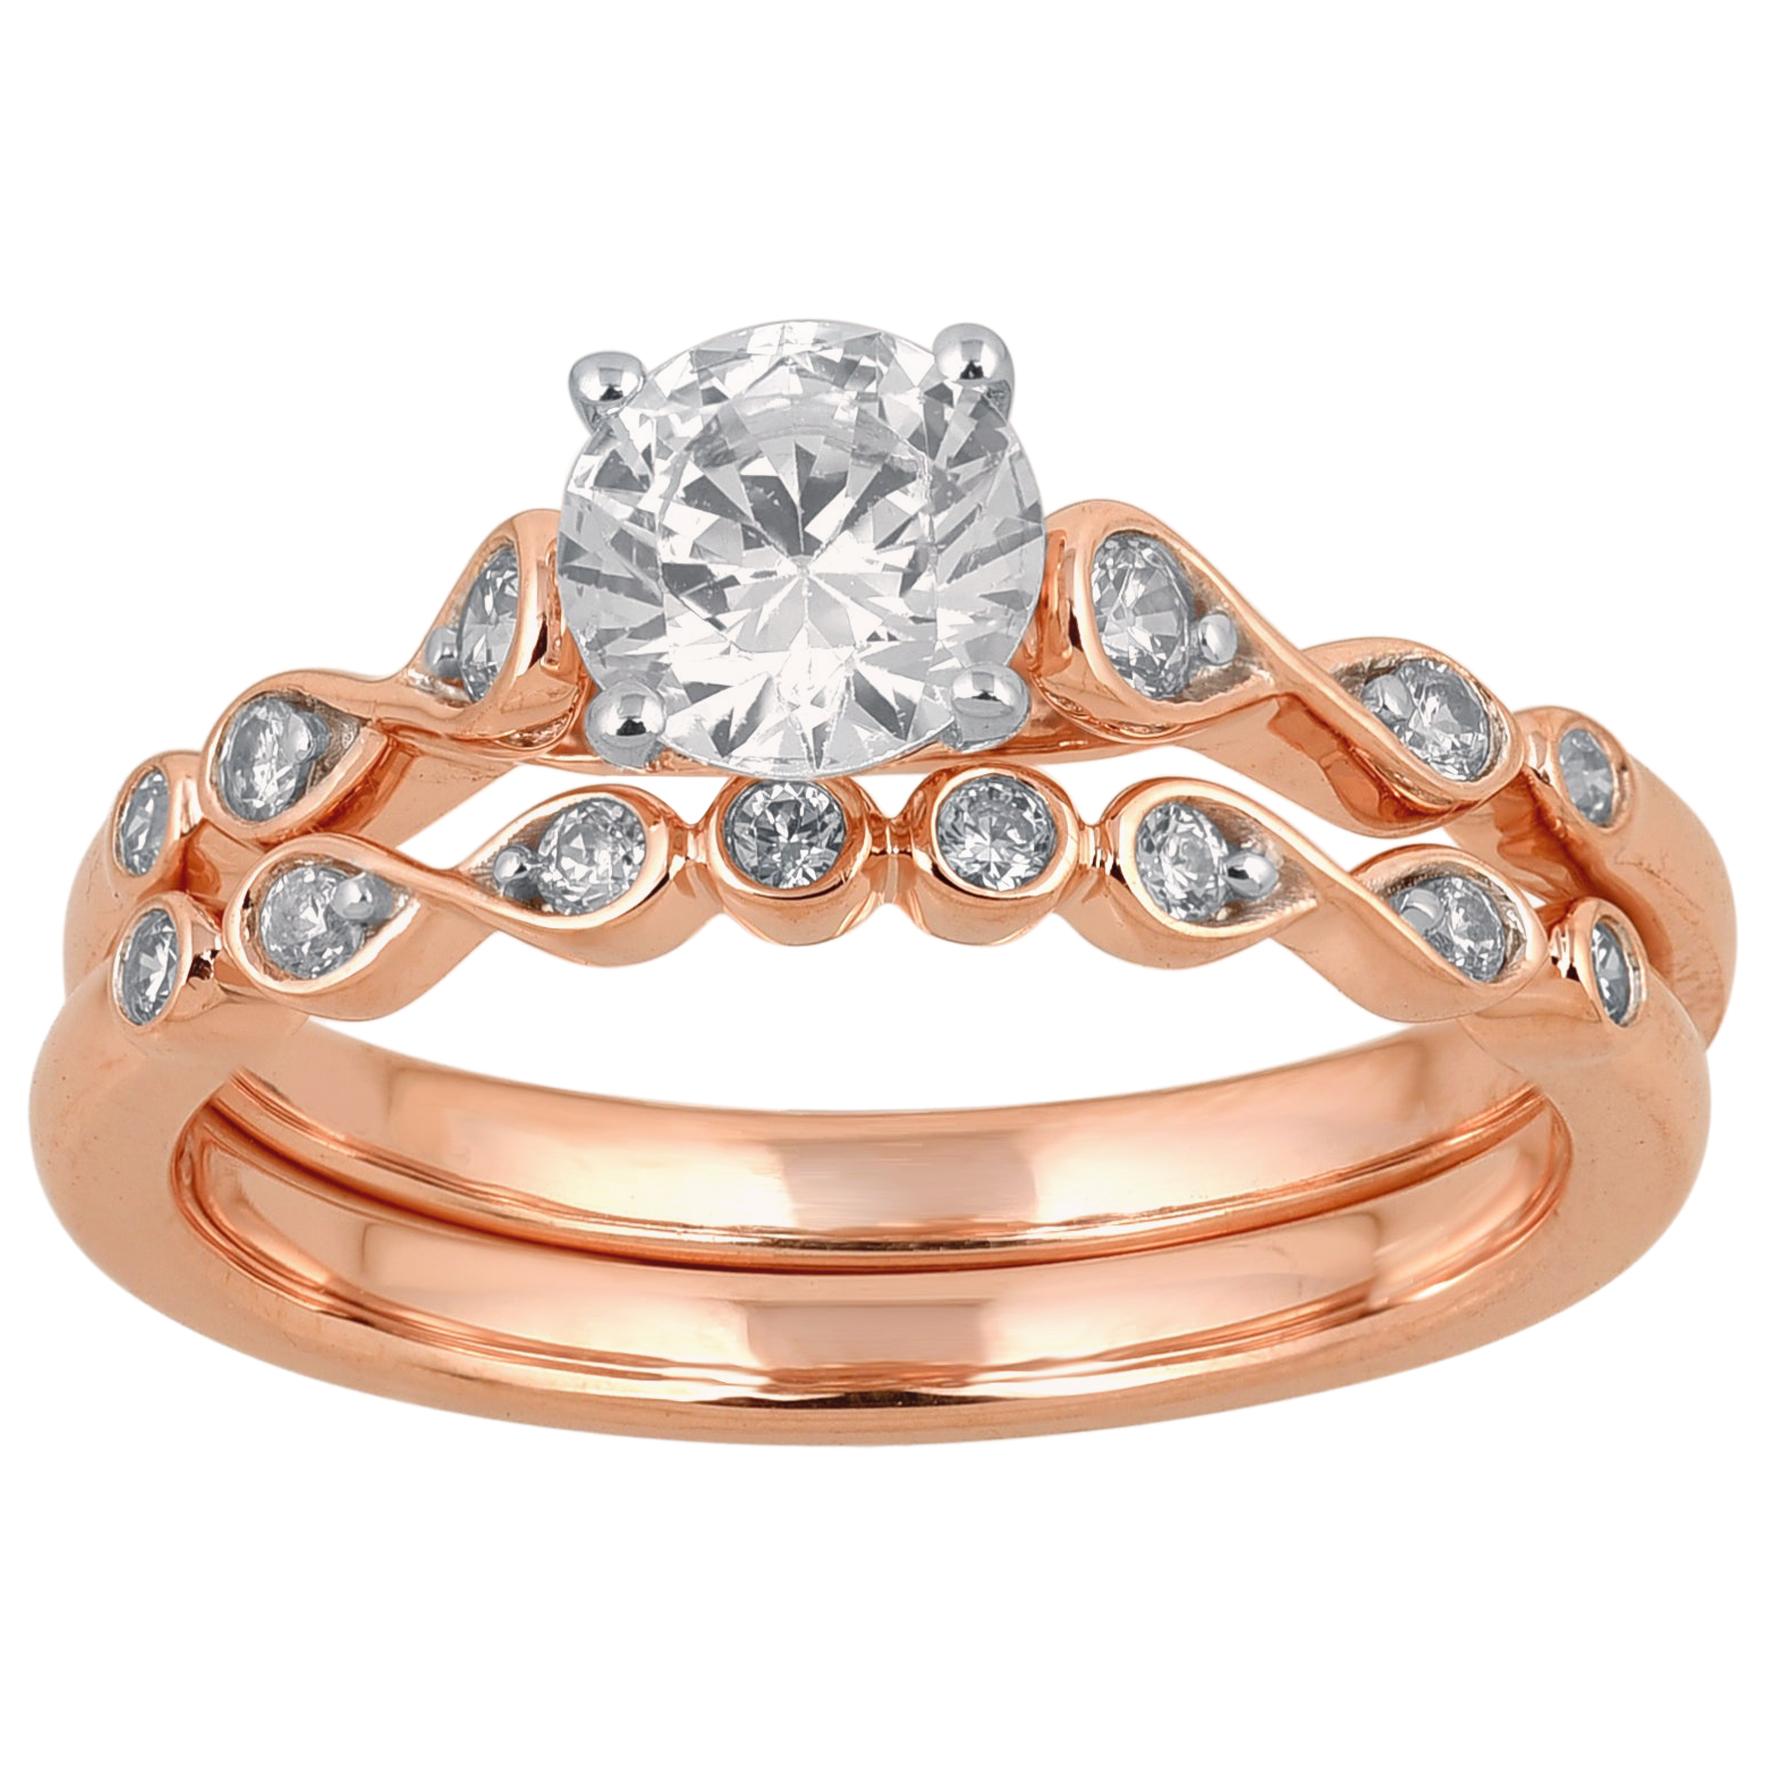 Bague de mariage Infinity en or rose 18 carats sertie d'un diamant rond de 1,0 carat TJD